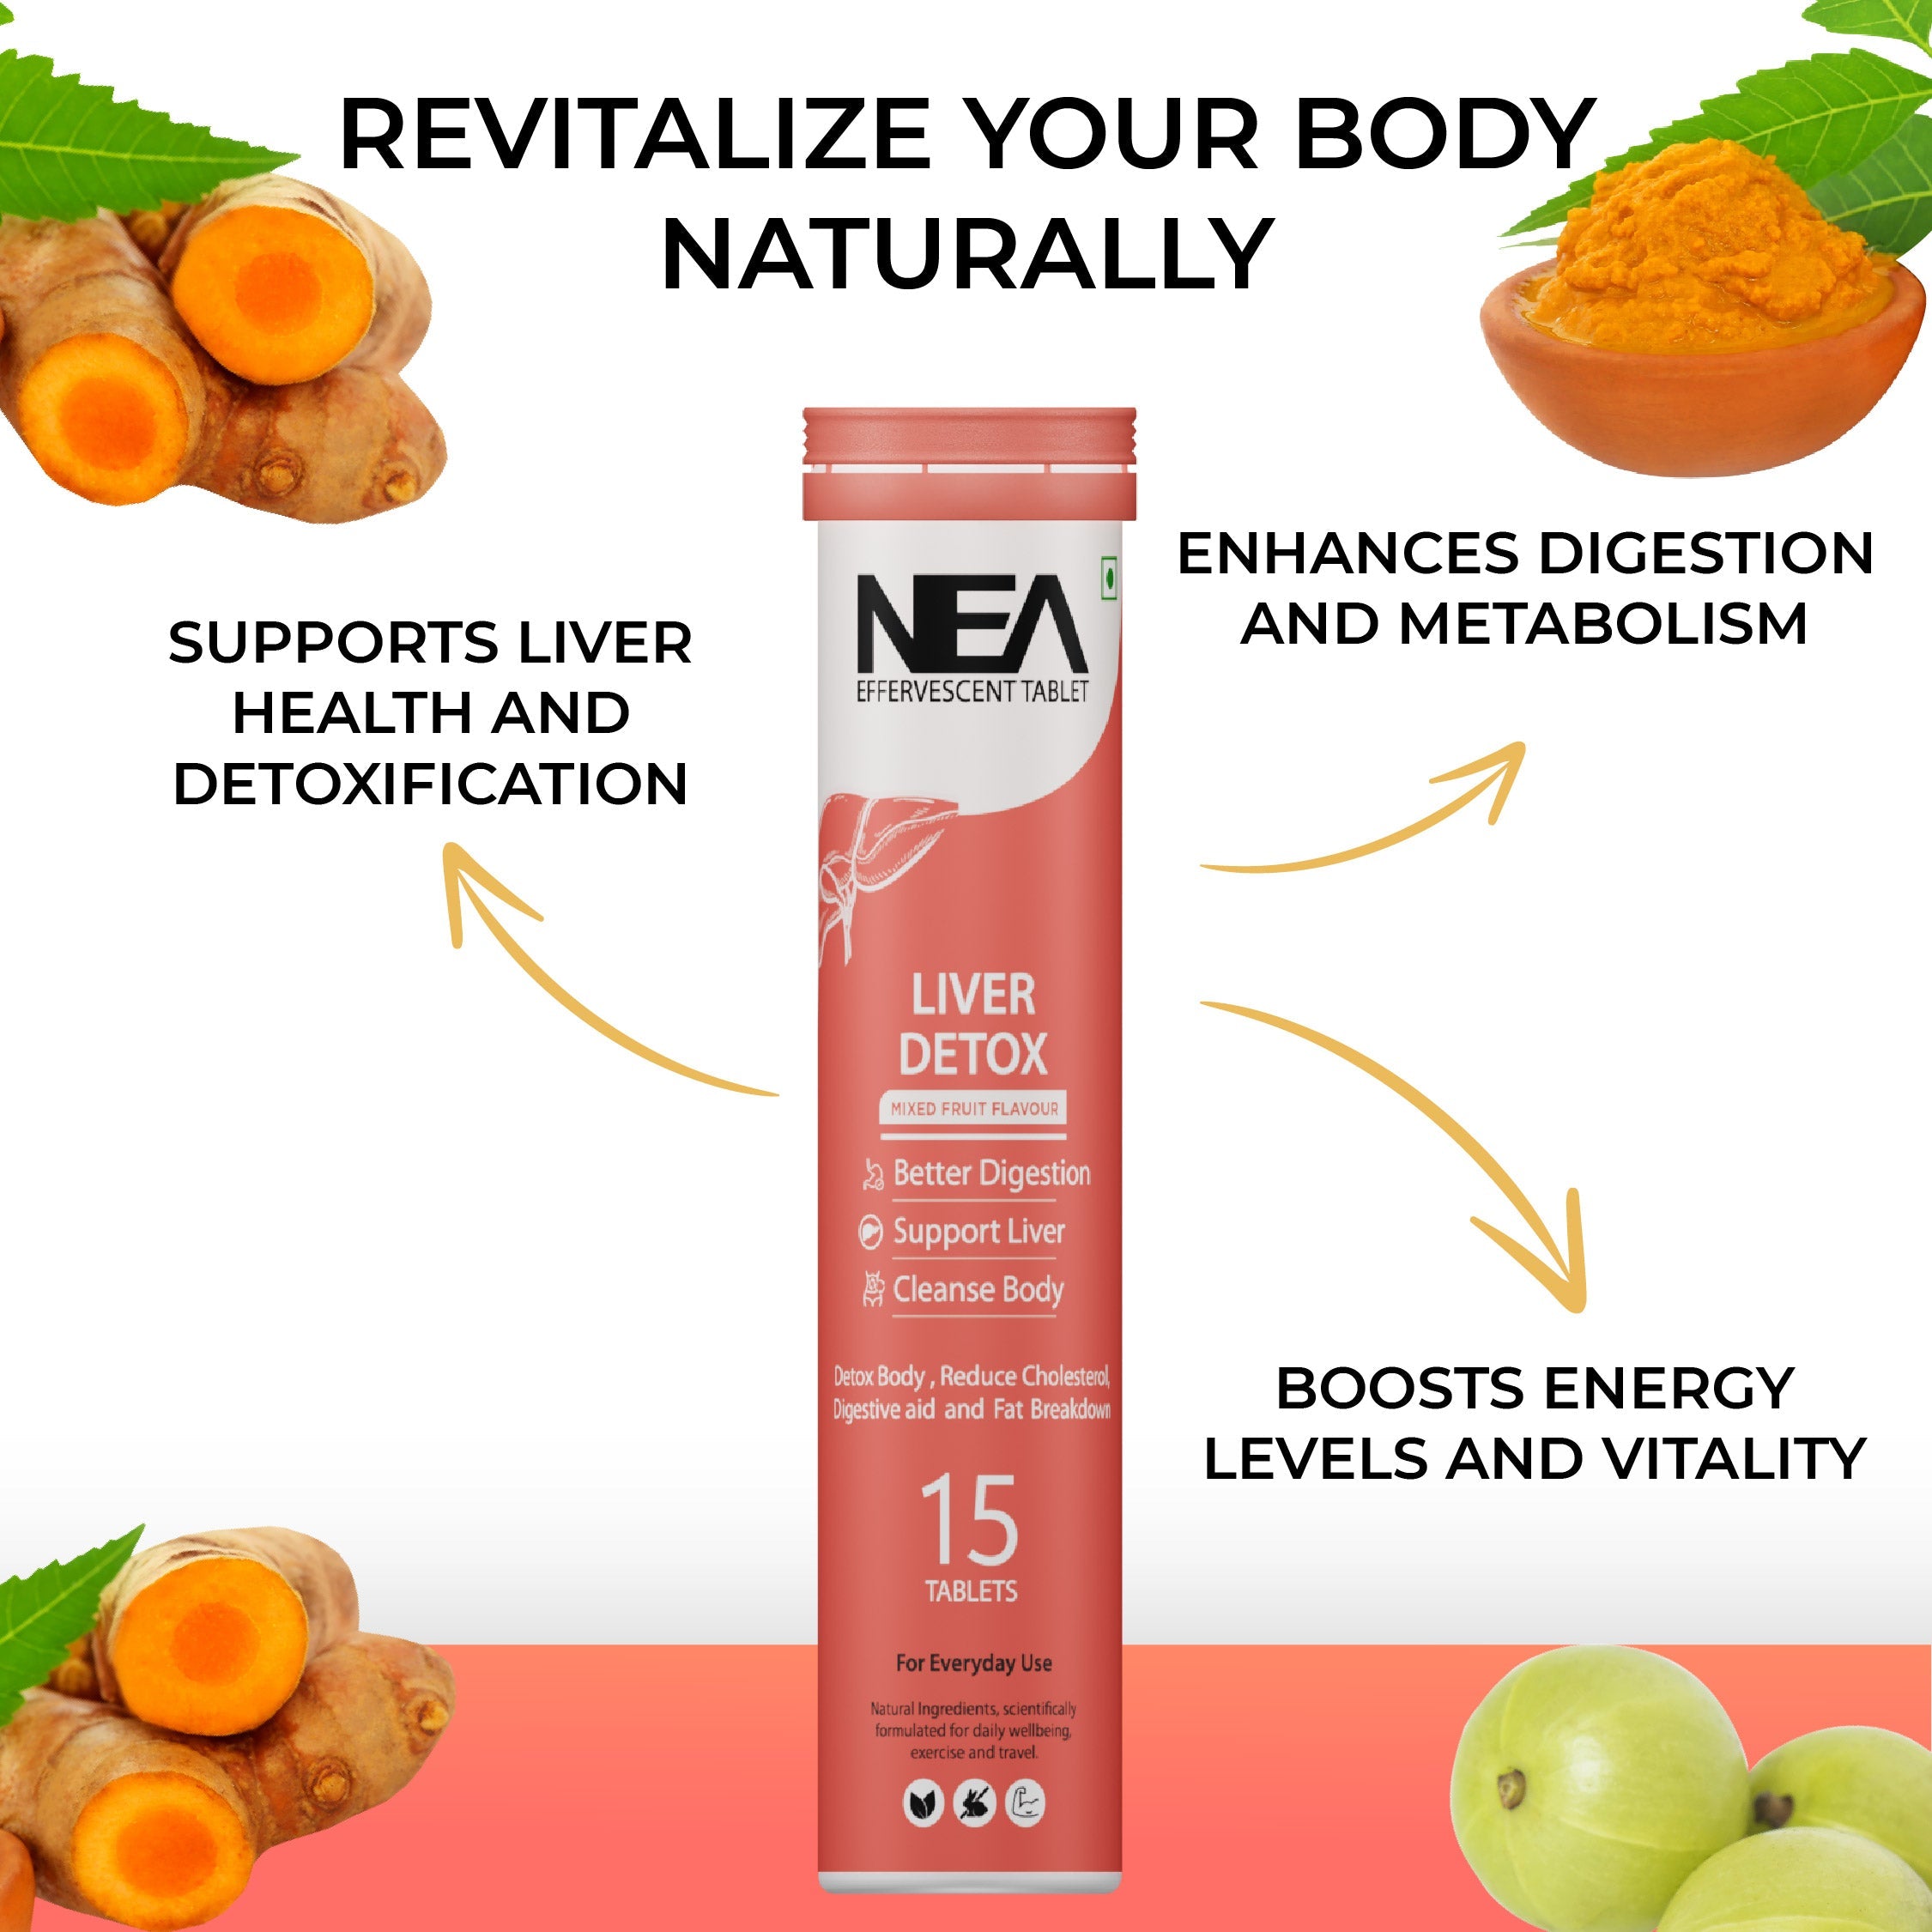 Nea Liver Detox Effervescent Tablets | 10 Super Ayurvedic Herbs | Reduce Cholesterol  (15 Tablets)